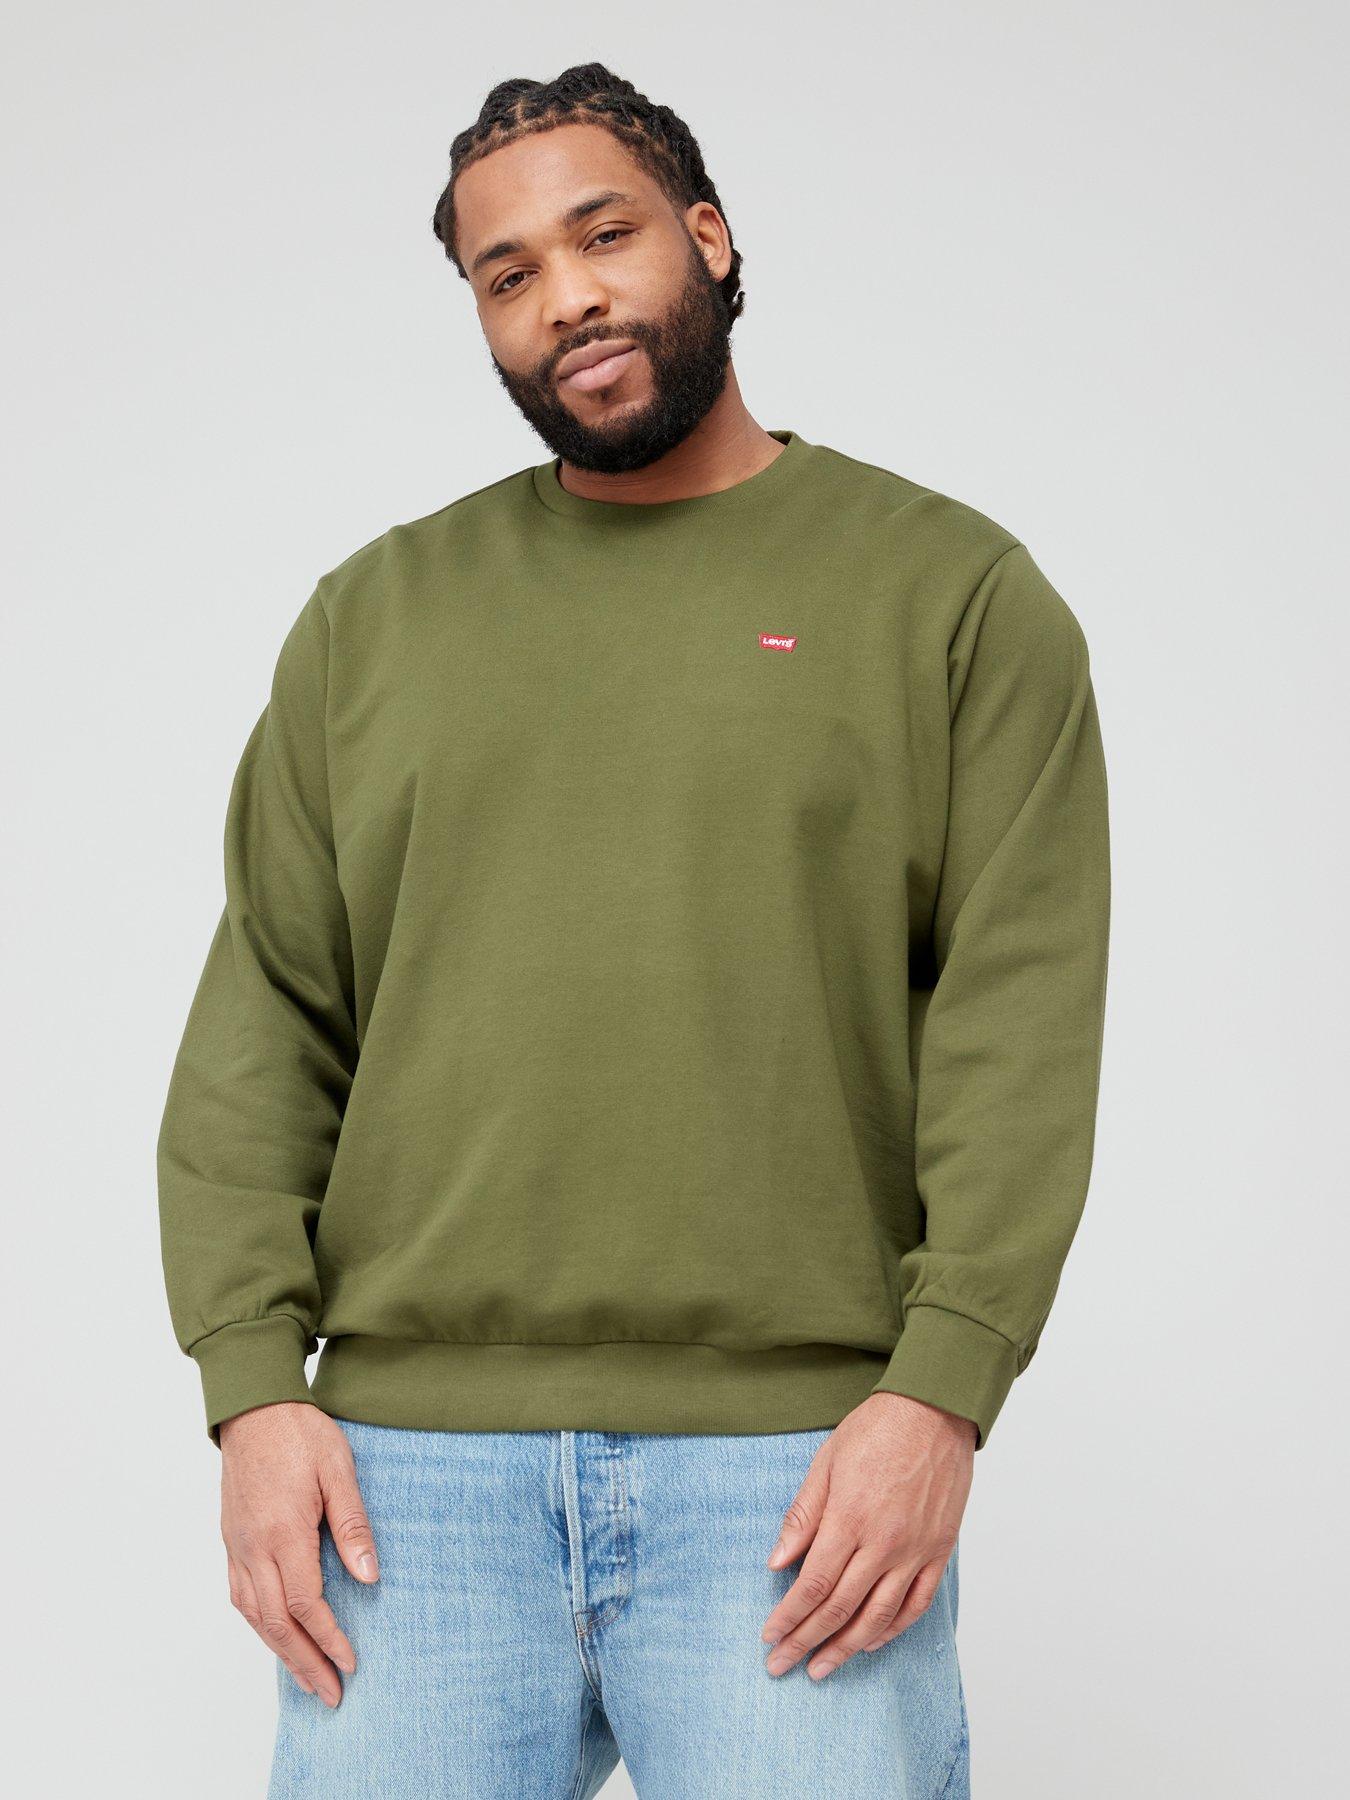 Original Housemark Crewneck Sweatshirt - Levi's Jeans, Jackets & Clothing